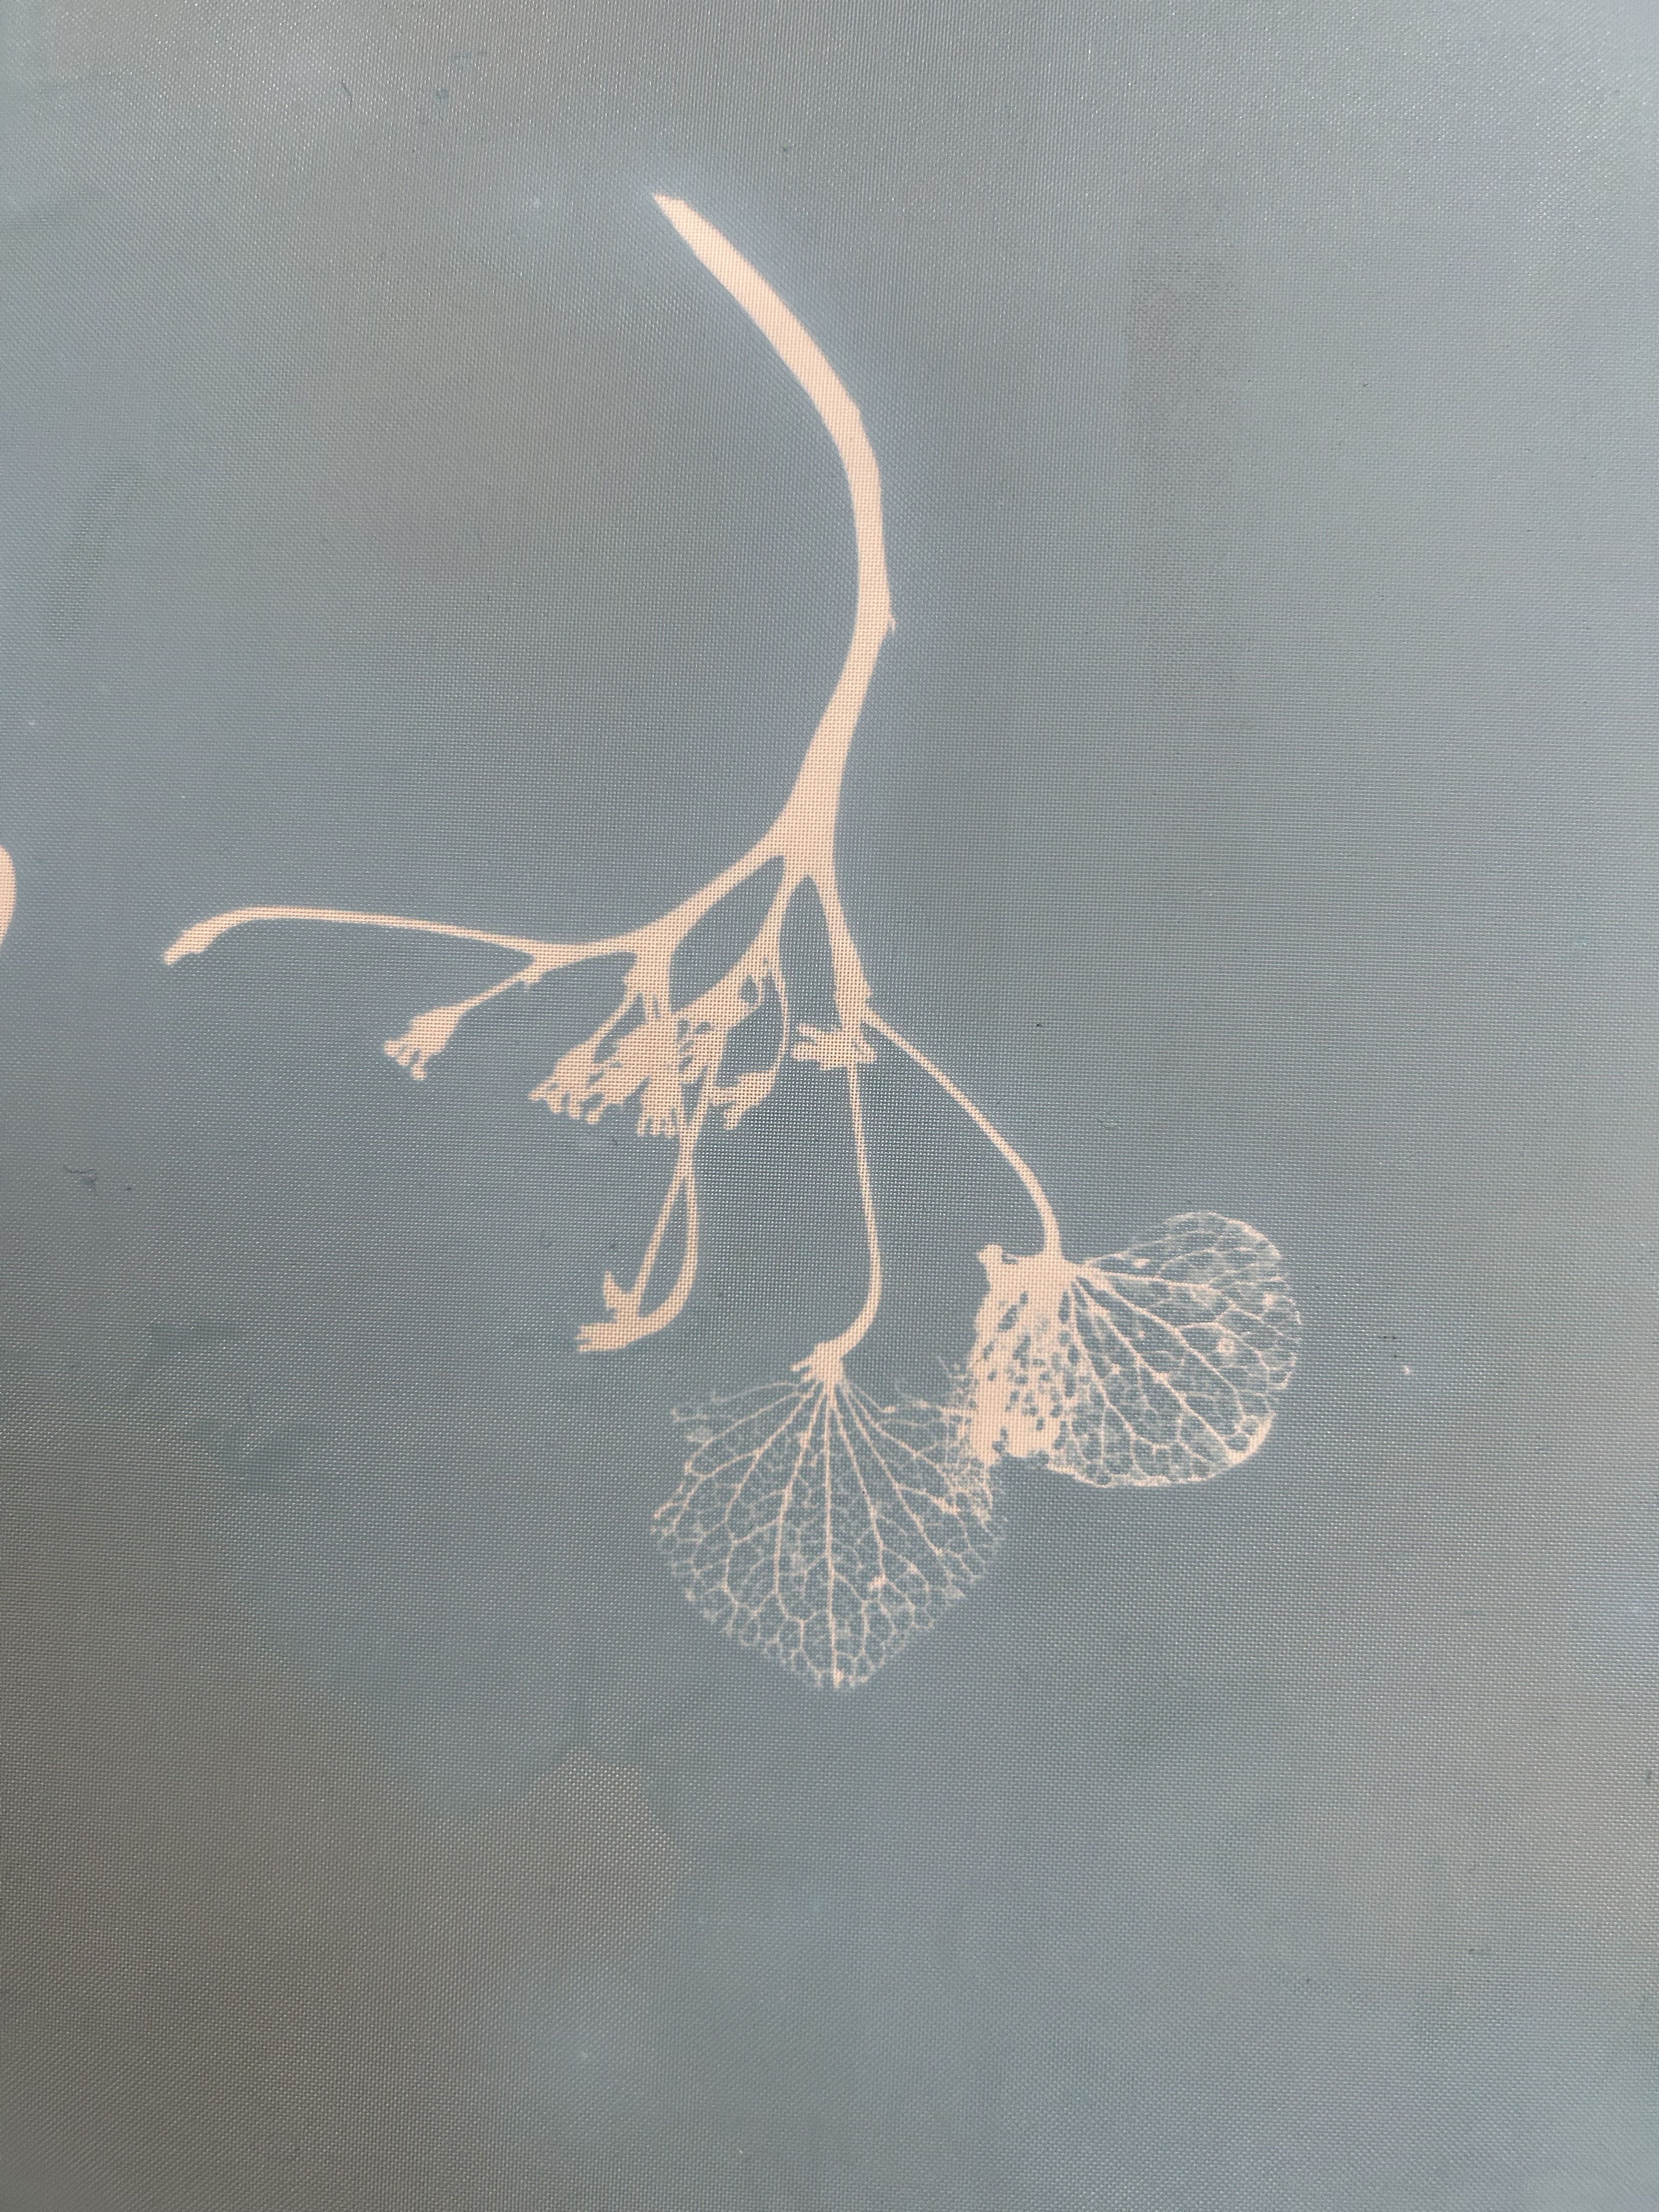 faded dark blue screenprint of botanical item